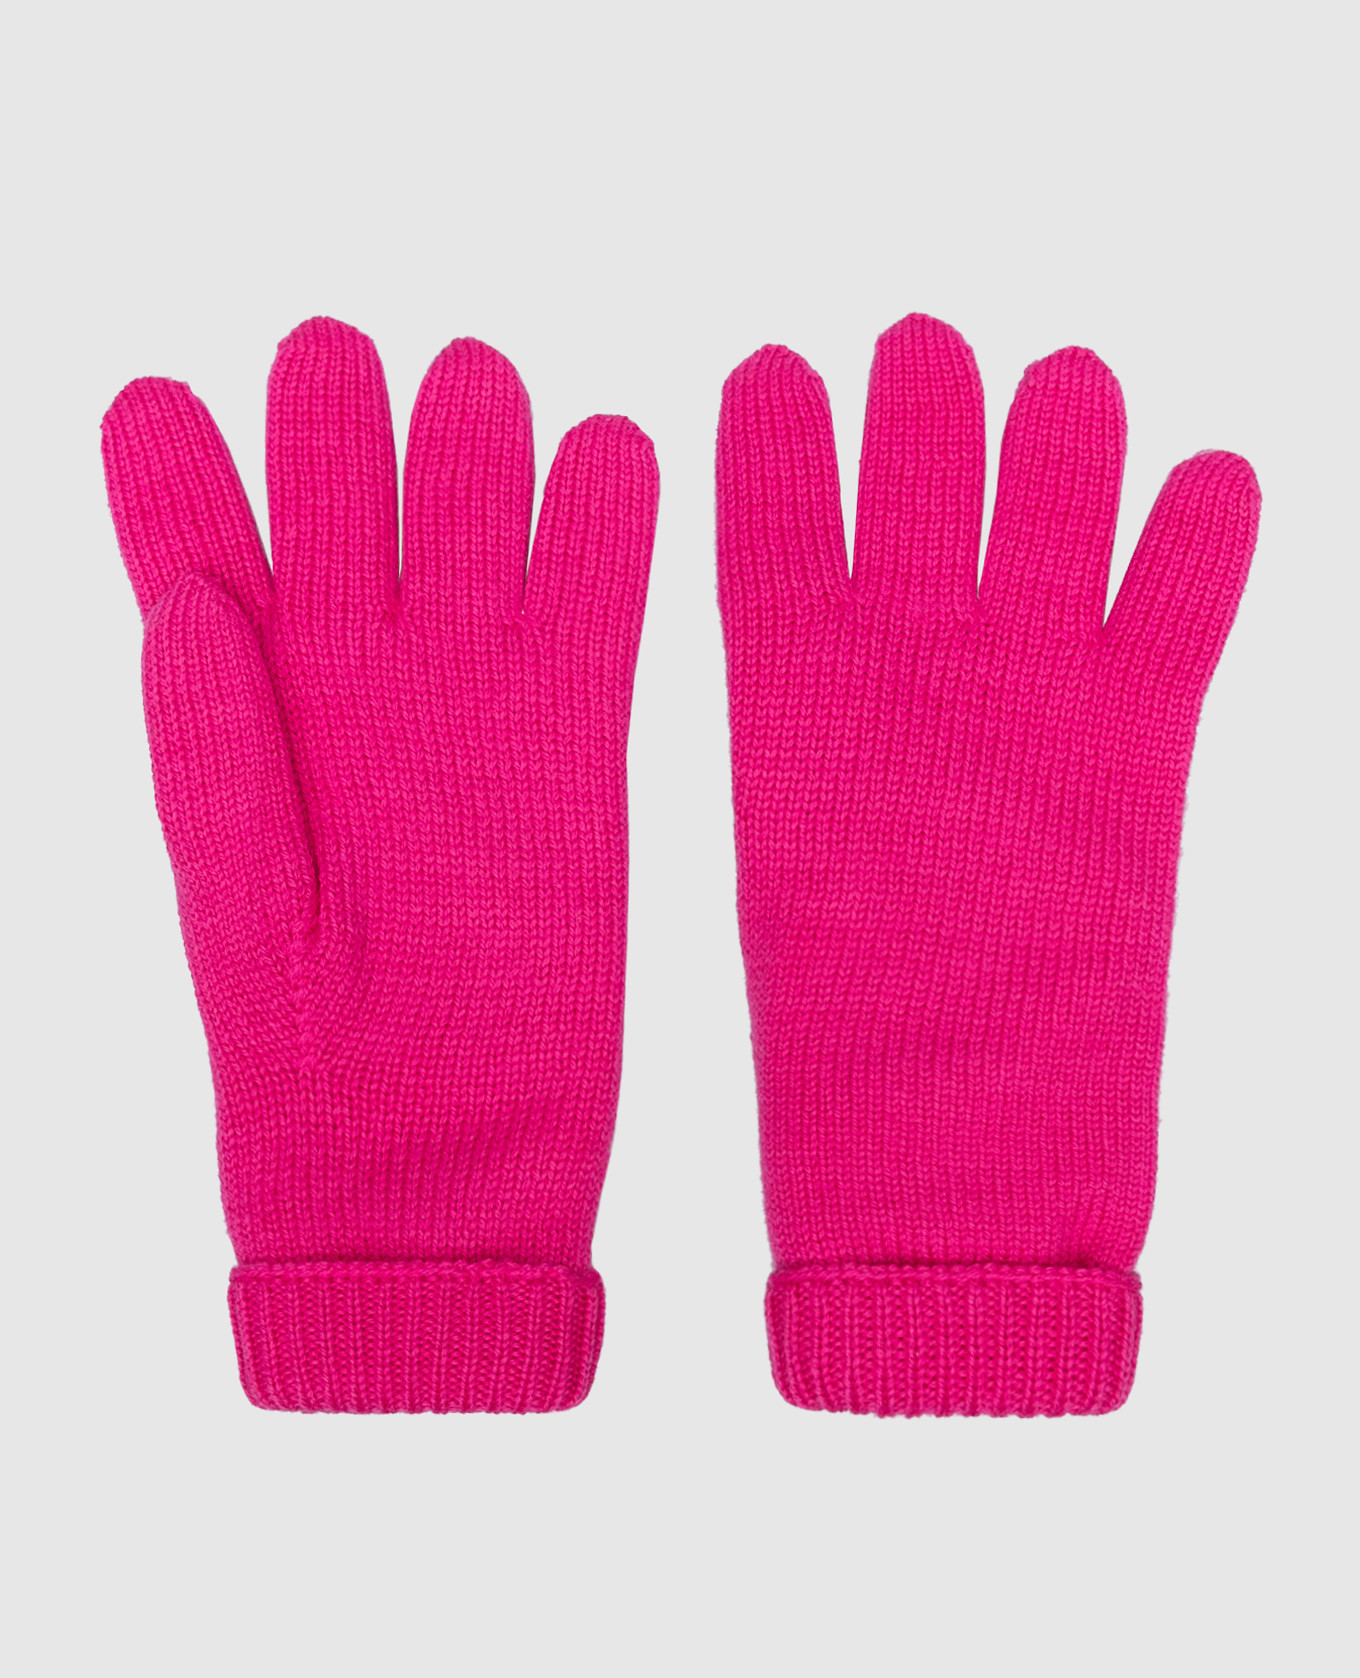 Children's pink mittens made of wool